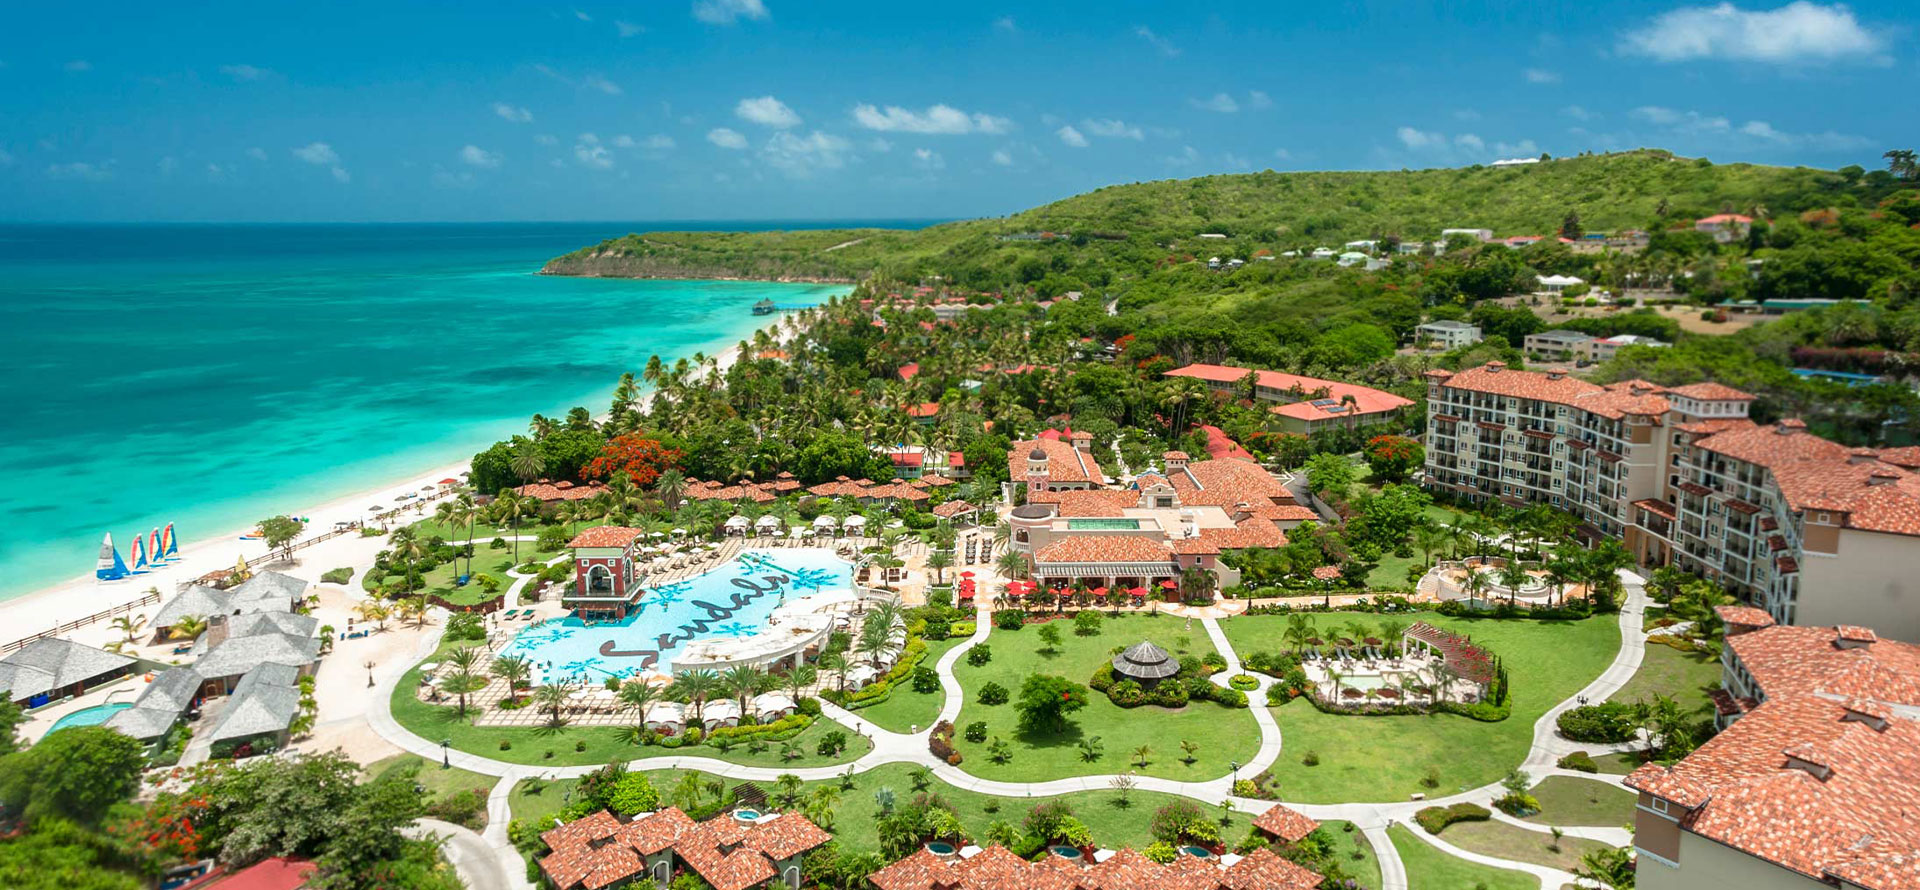 Antigua all inclusive resorts top view.